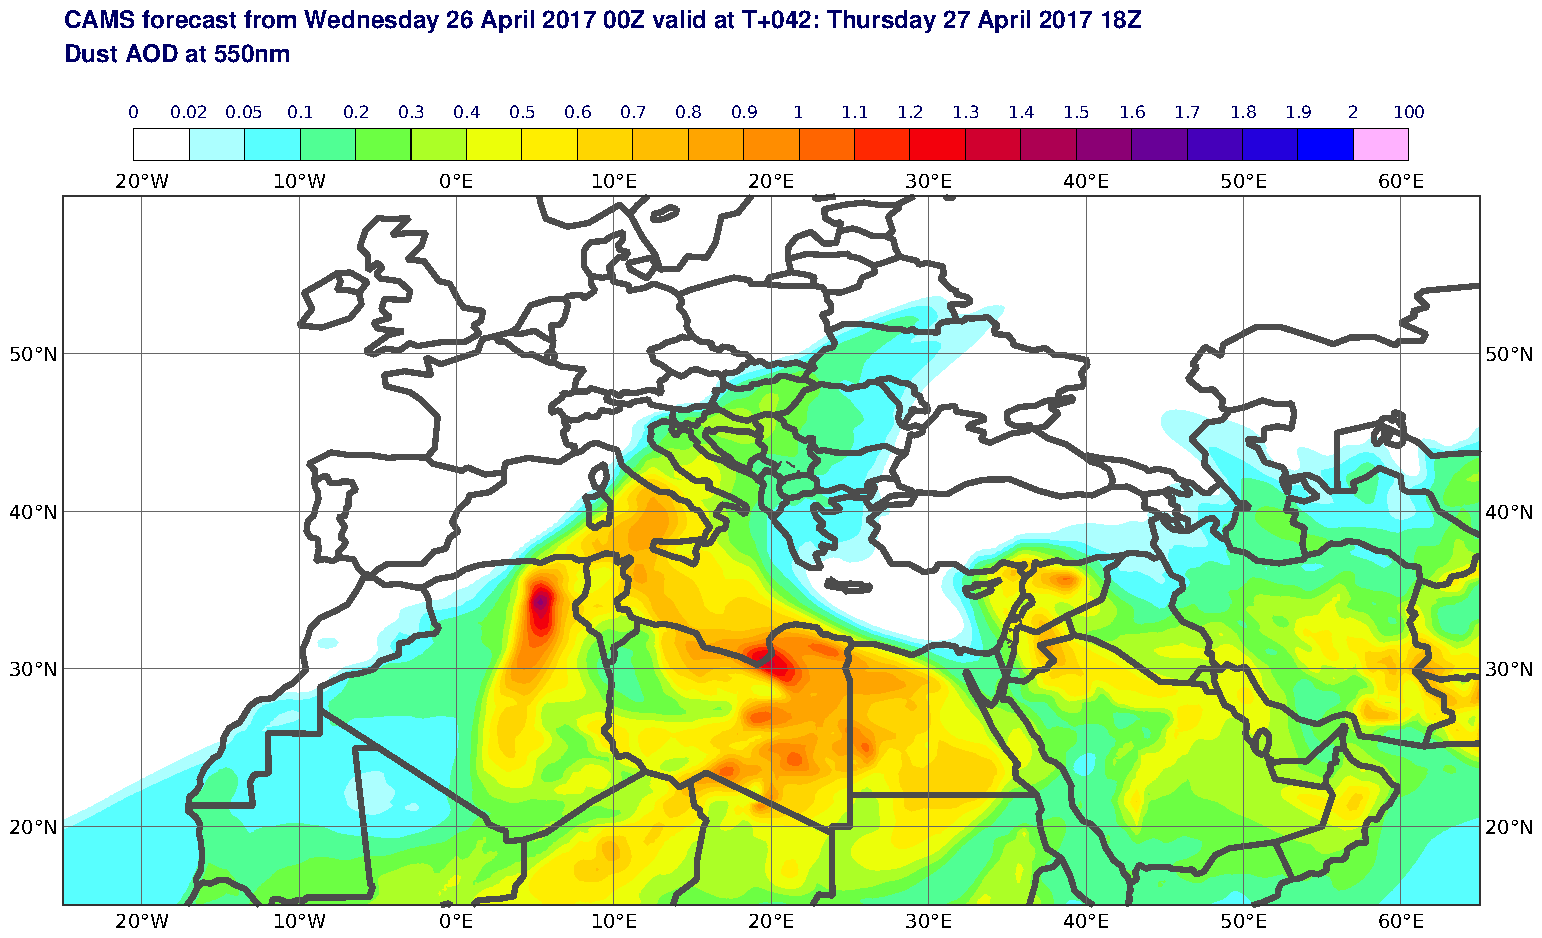 Dust AOD at 550nm valid at T42 - 2017-04-27 18:00